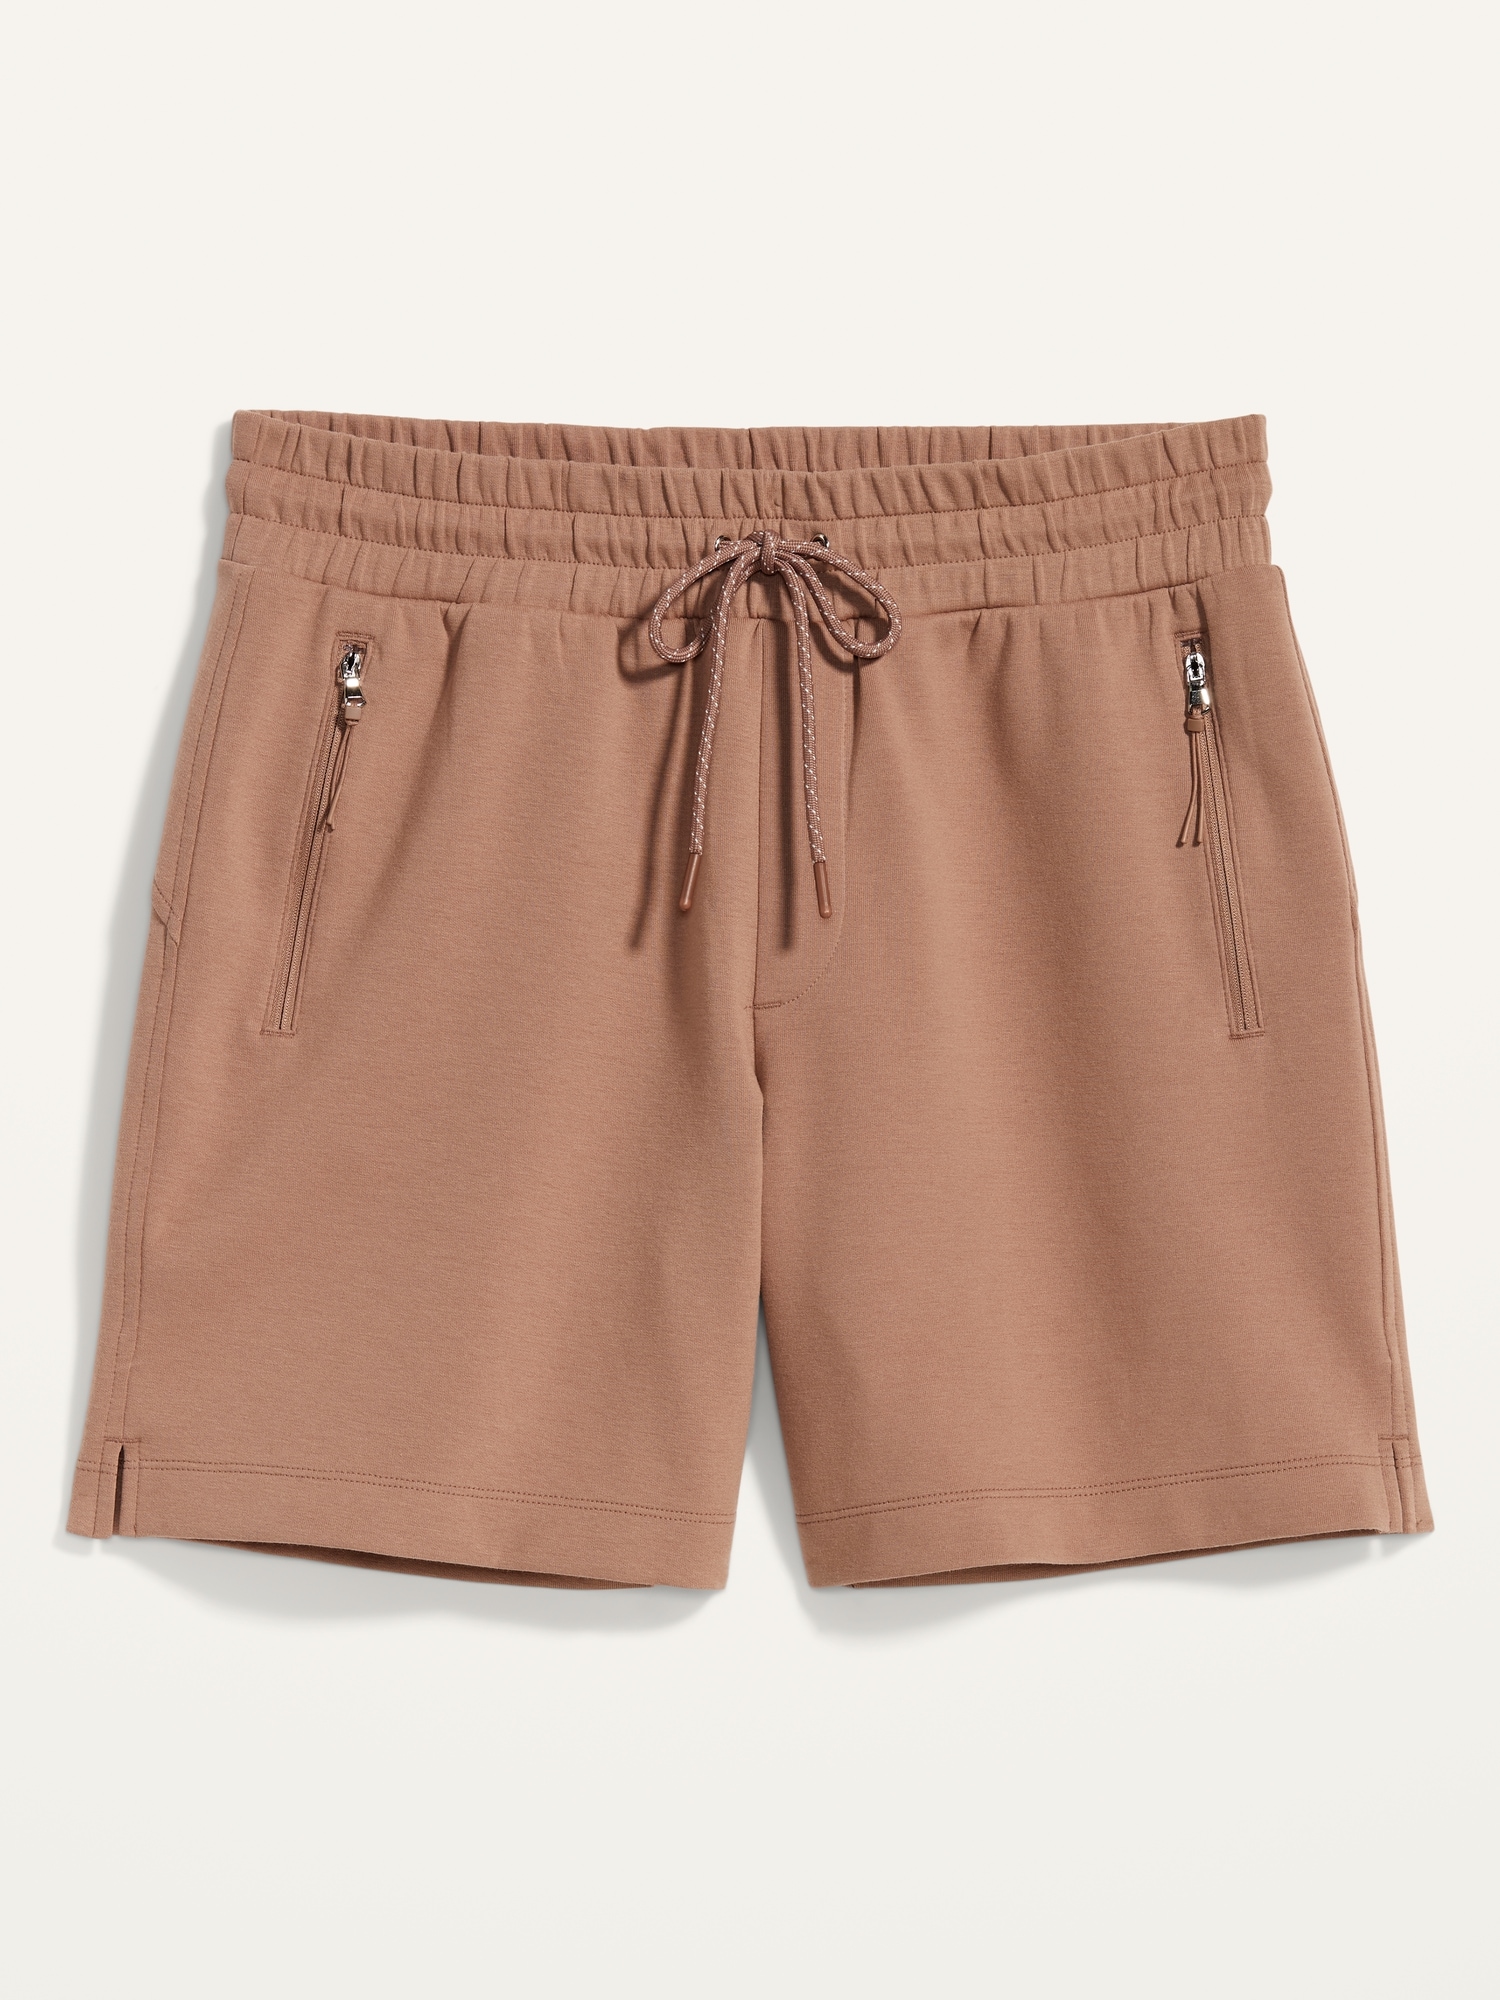 High-Waisted Dynamic Fleece Shorts -- 6-inch inseam